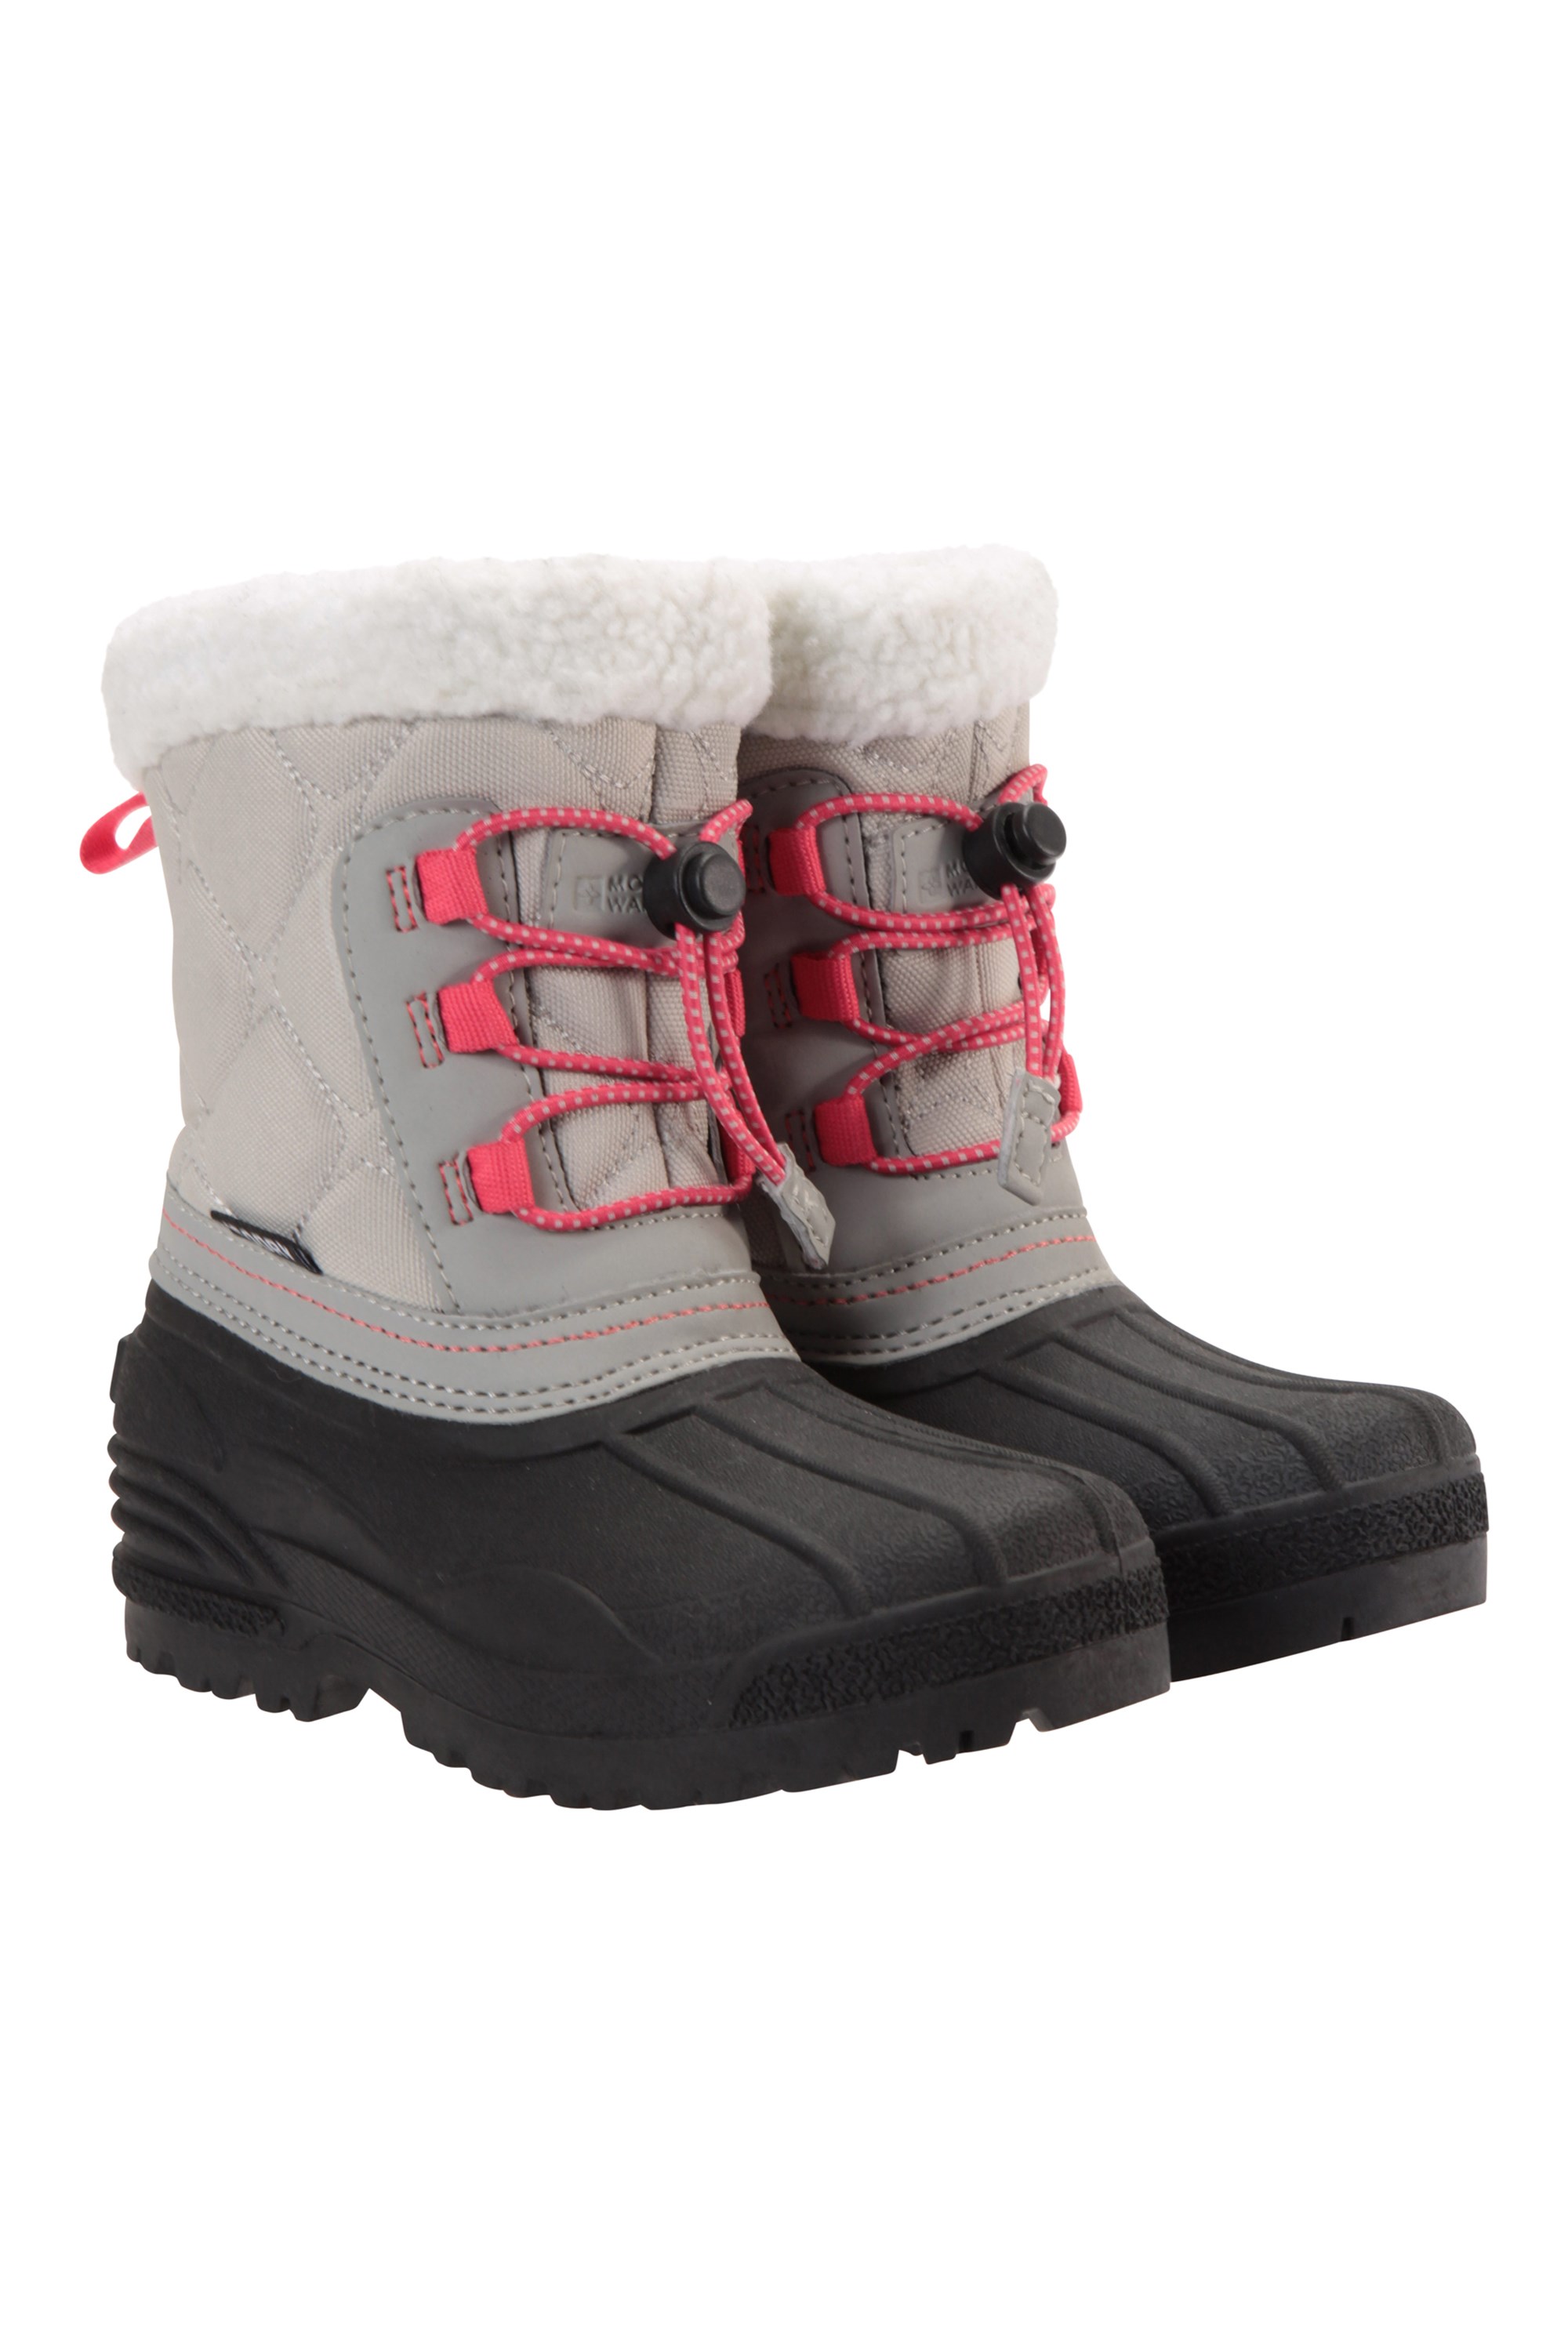 Mountain Warehouse Arctic Fur Trim Junior Waterproof Snow Boots Silver